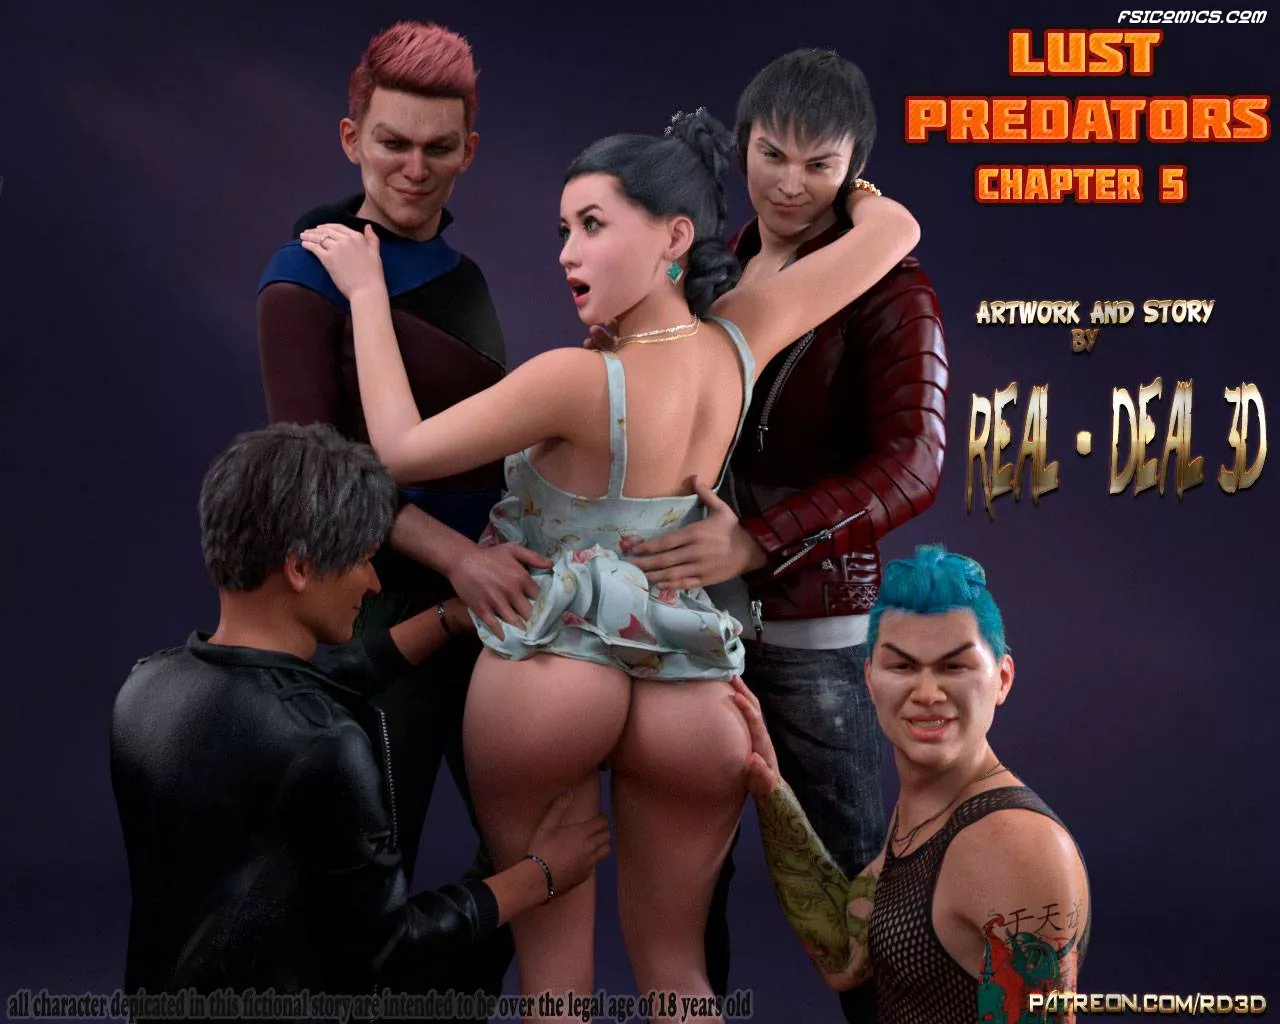 Lust Predators Chapter 5 - Real Deal 3D - 11 - FSIComics